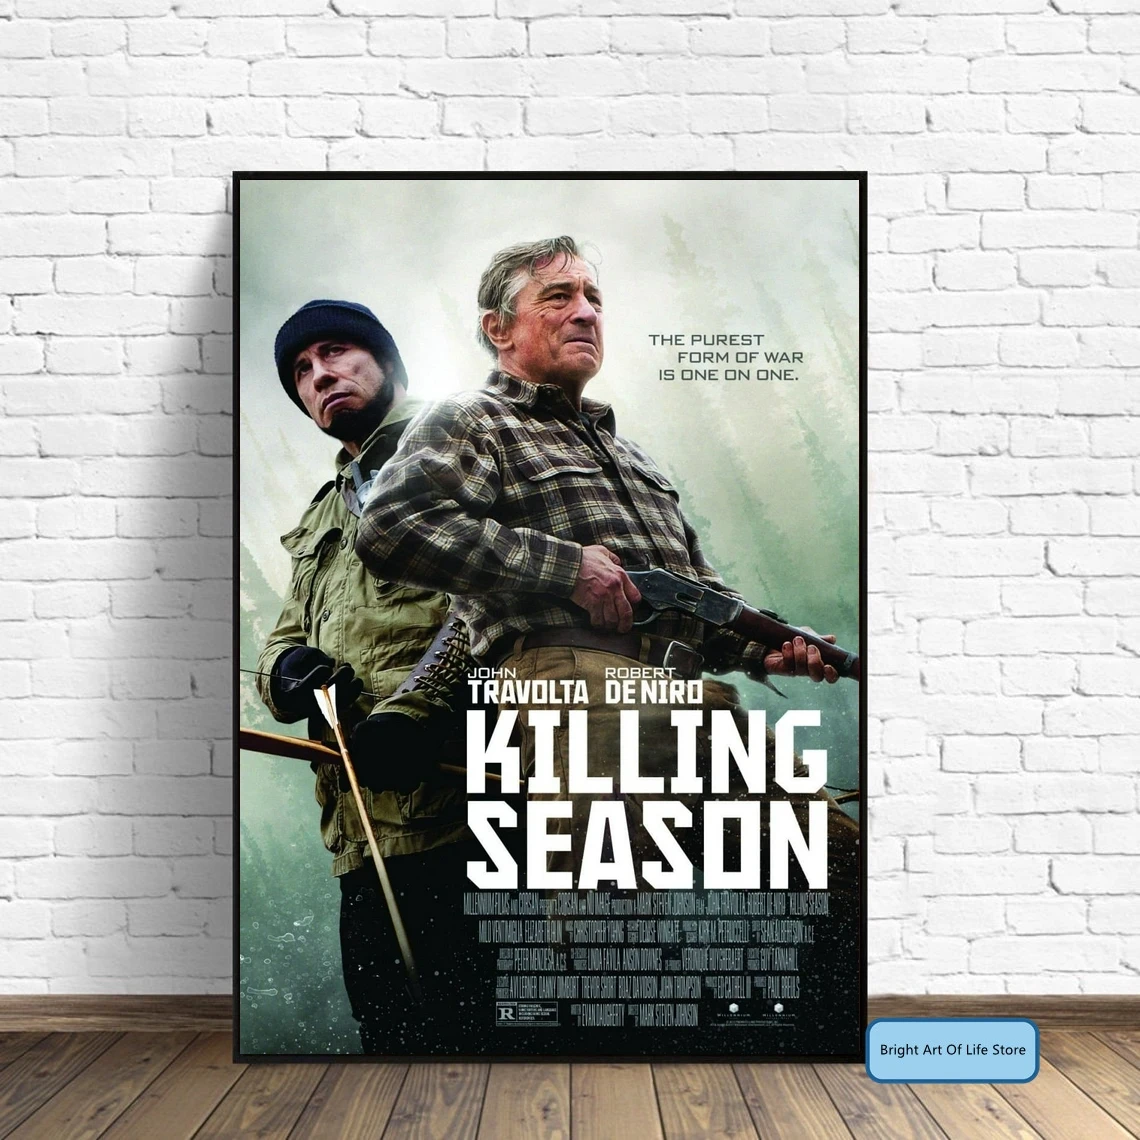 Killing Season (2013) Poster Film Cover Photo Print Canvas Wall Art Decor Acasă (Fara Rama)1